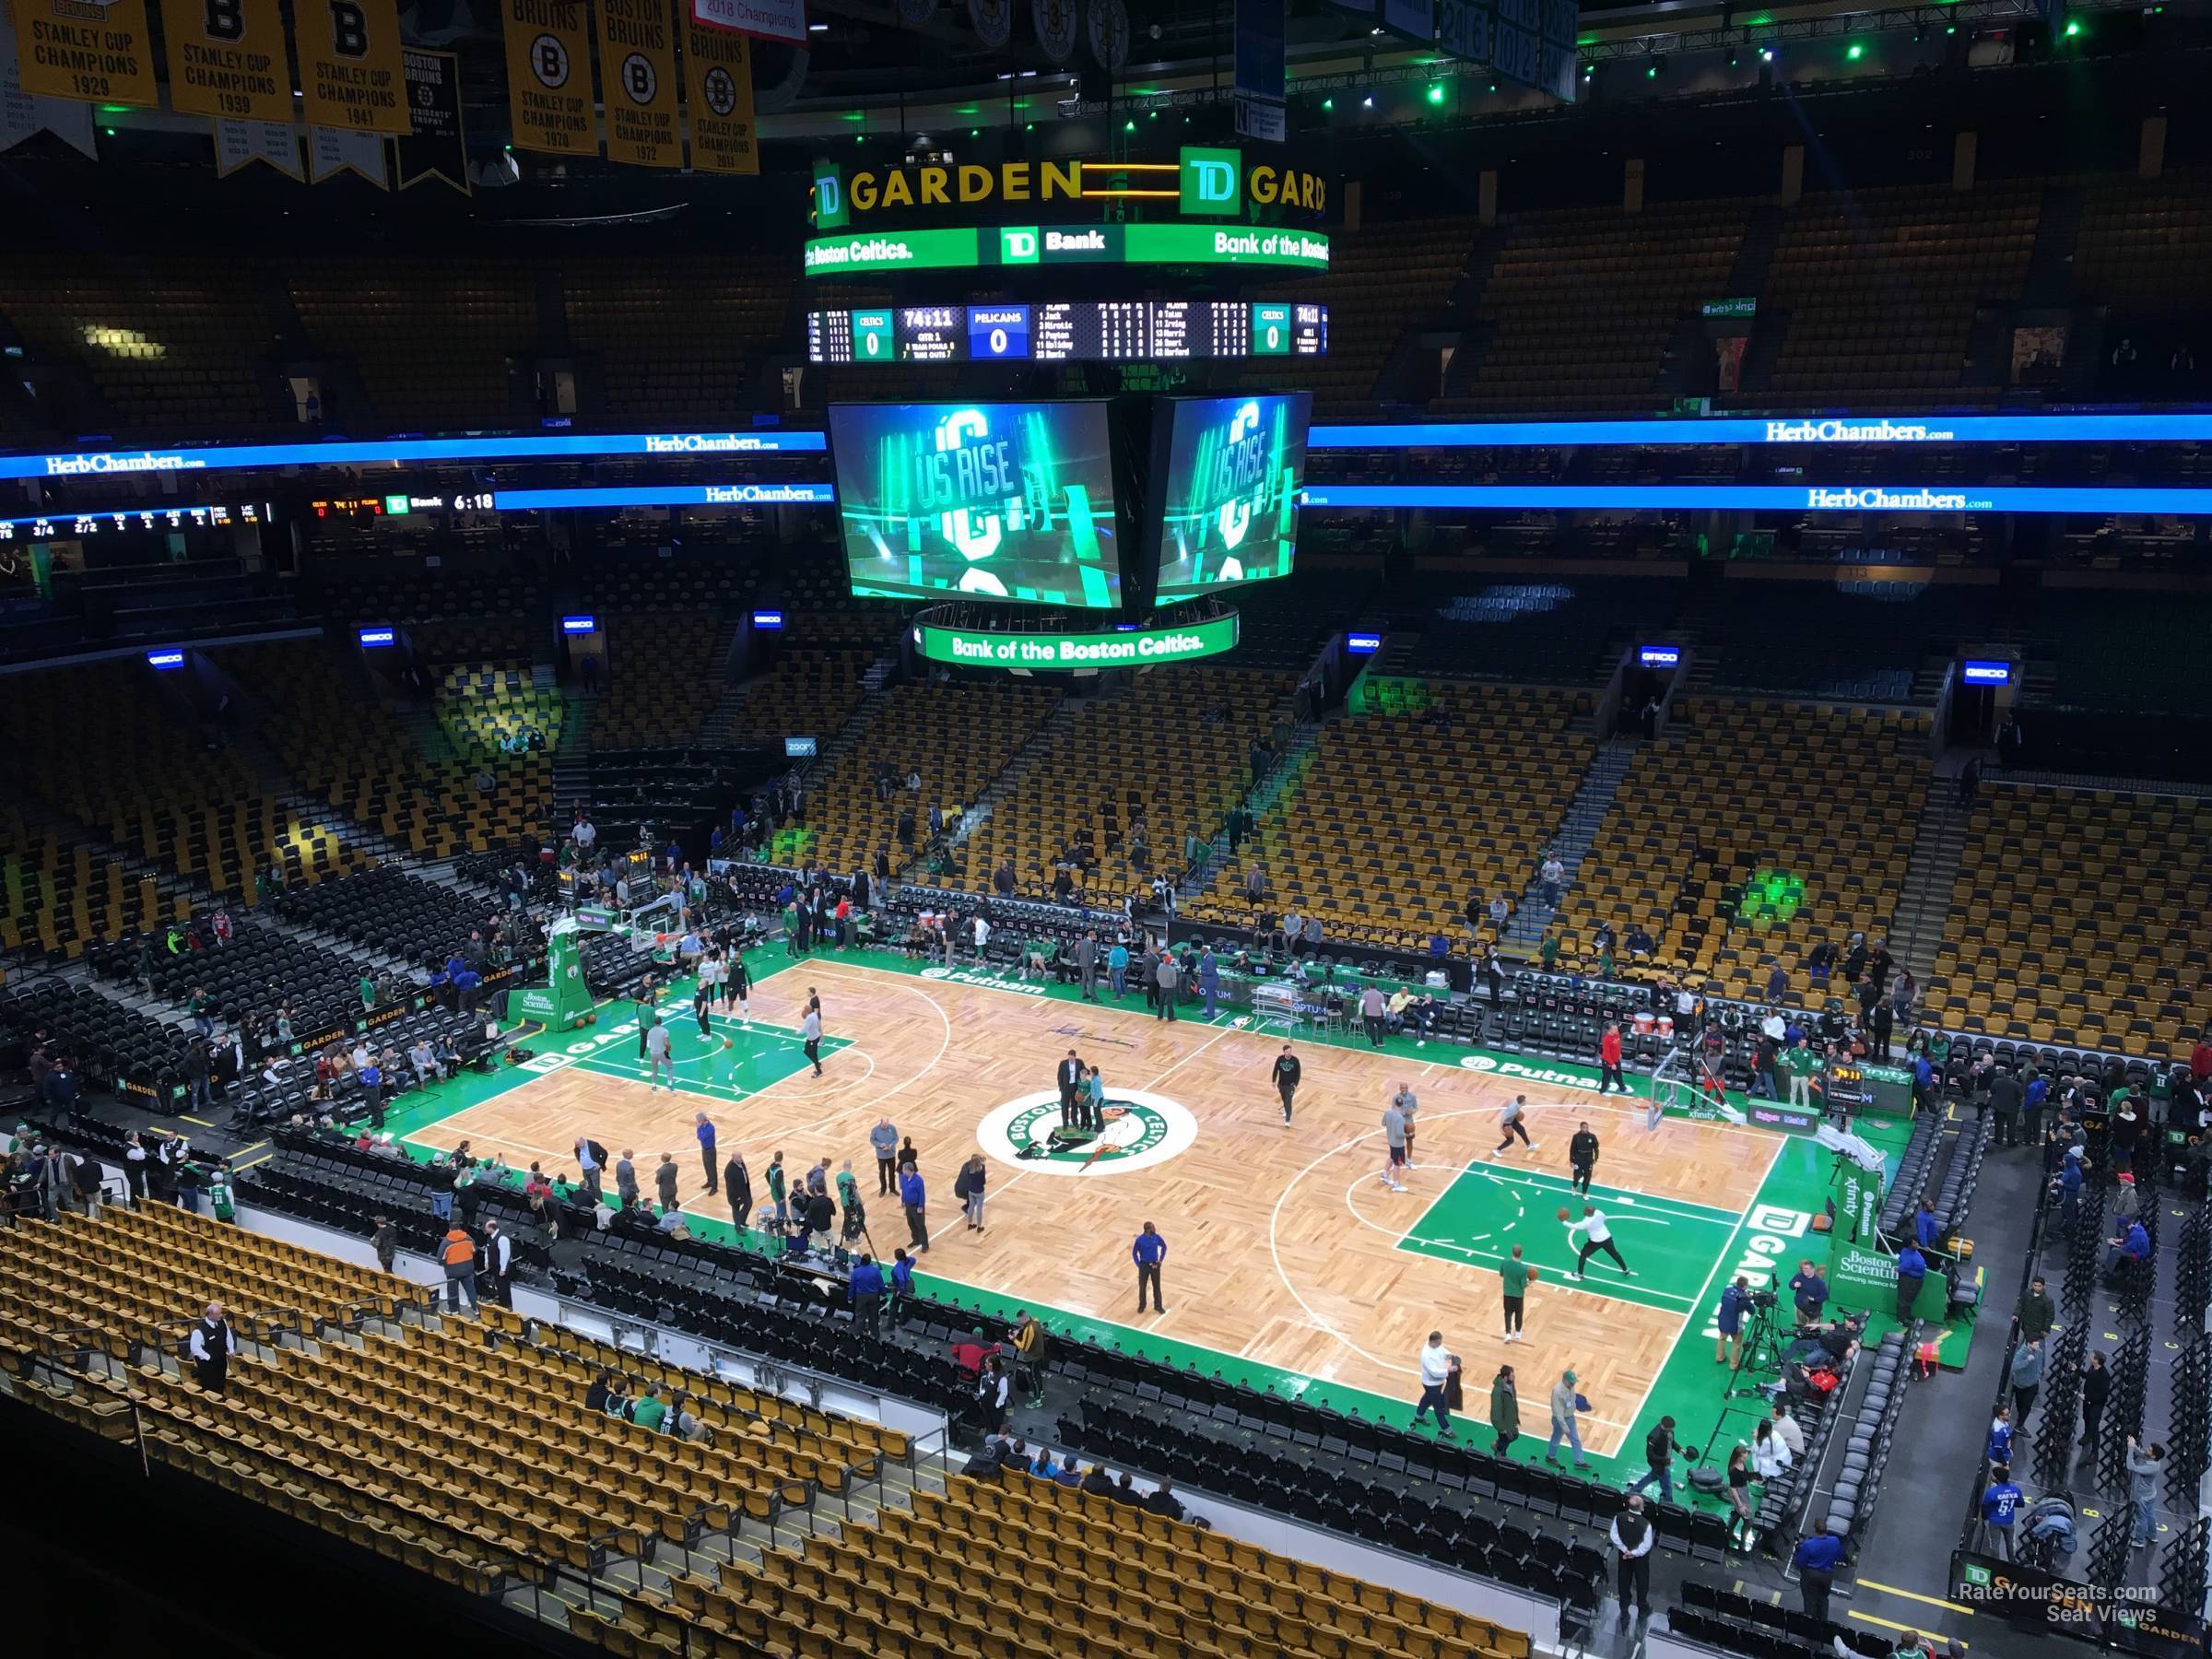 Td Garden Section 314 Boston Celtics Rateyourseats Com